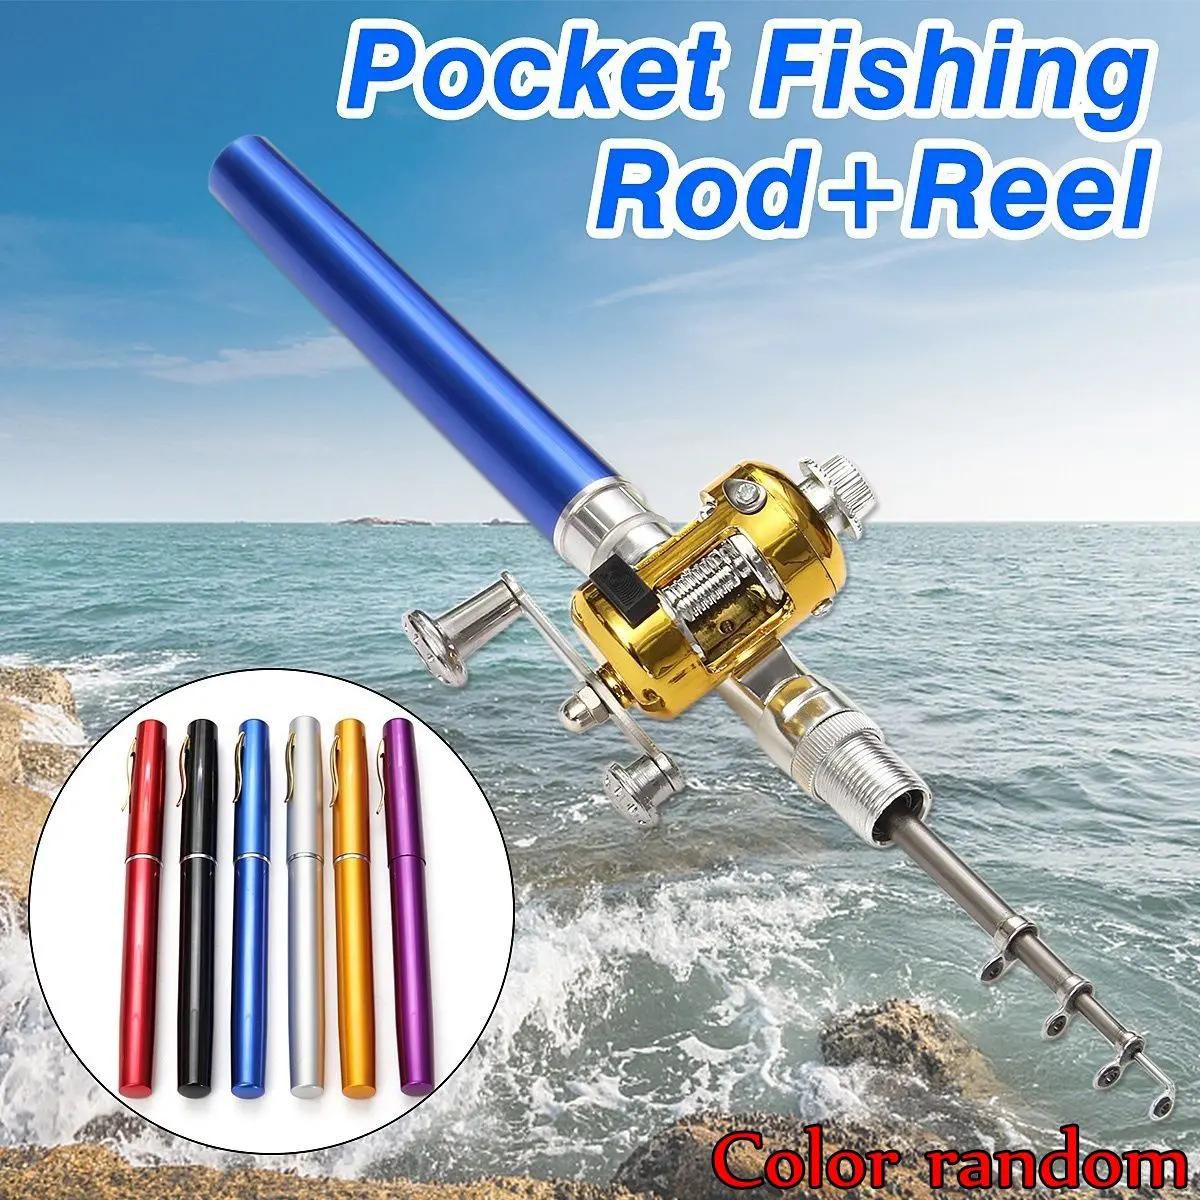 1M Mini Portable Pocket Fish Pen Shape Aluminum Alloy Fishing Rod Pole +  Reel Combos price from kilimall in Kenya - Yaoota!